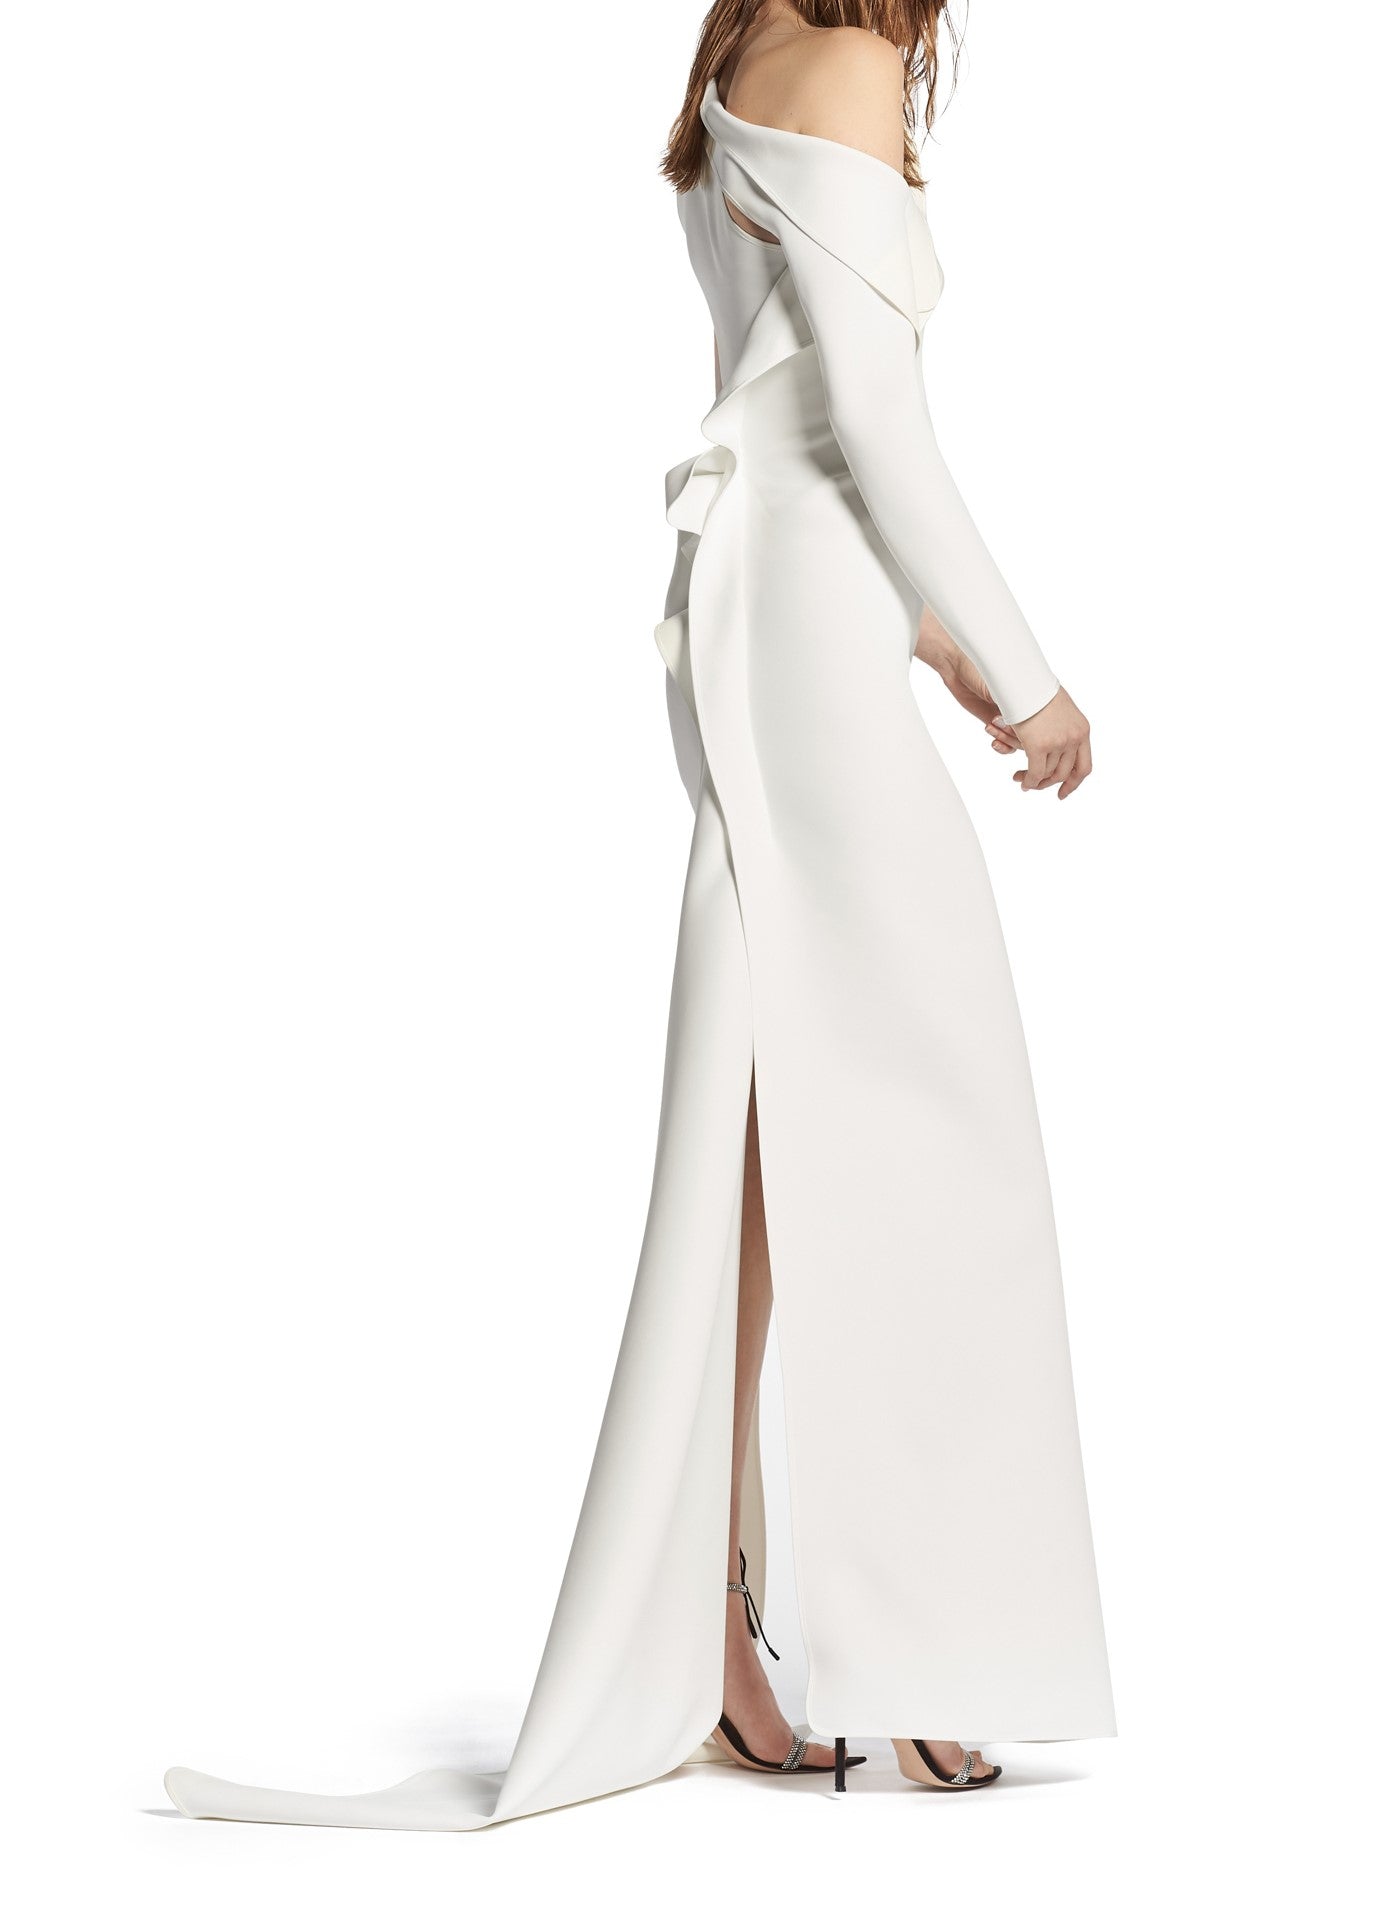 Toni Maticevski Archer gown. Asymmetrical neckline gown with thigh high slit. 